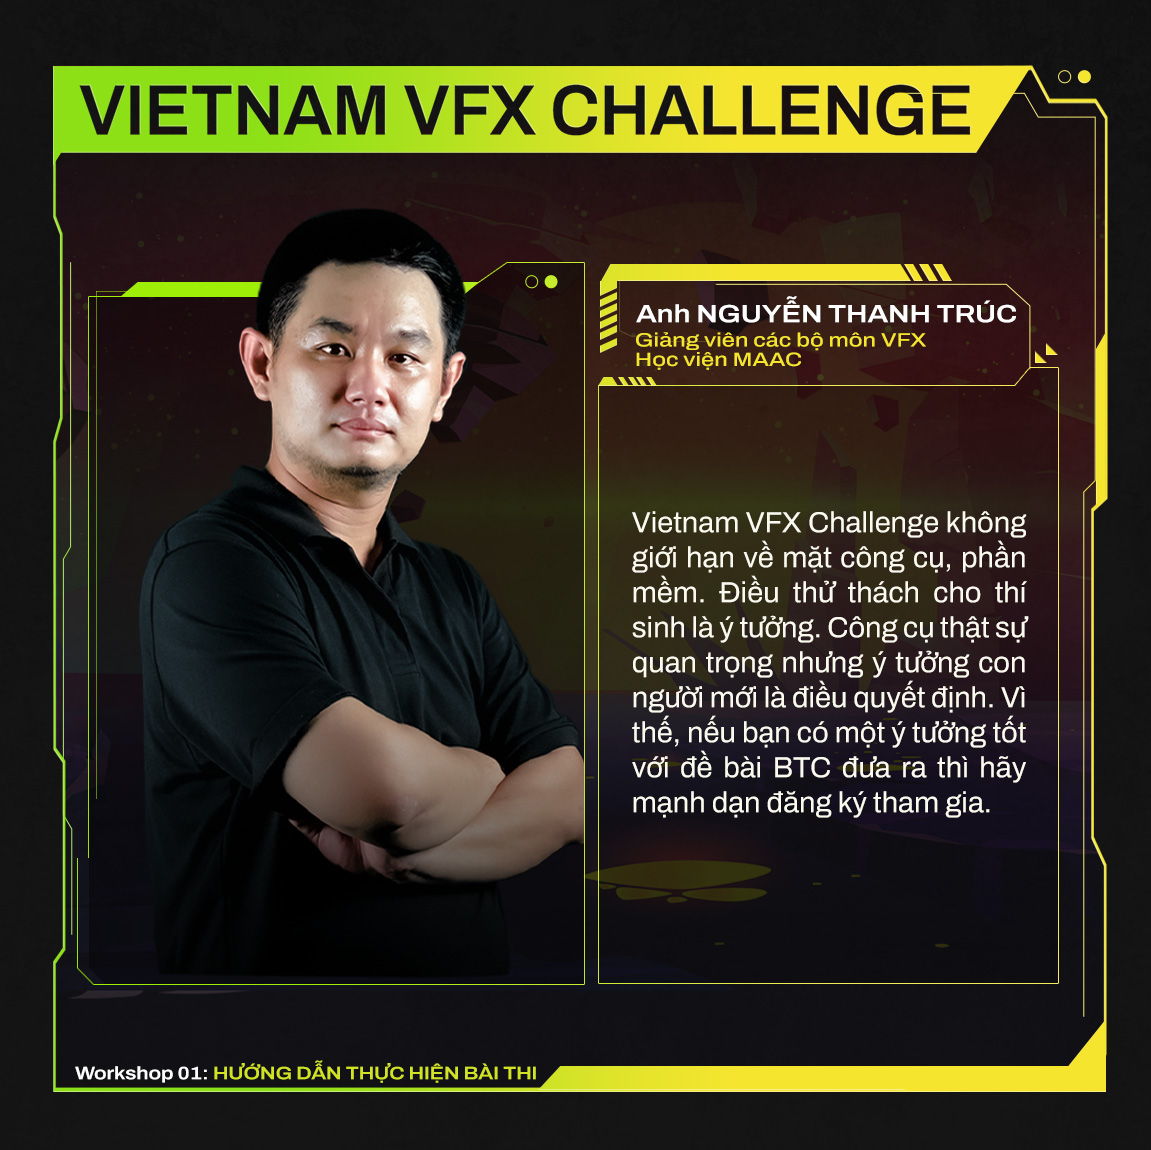 6-lang-nghe-ban-giam-khao-vietnam-vfx-challenge-he-lo-bi-quyet-chinh-phuc-cuoc-thi